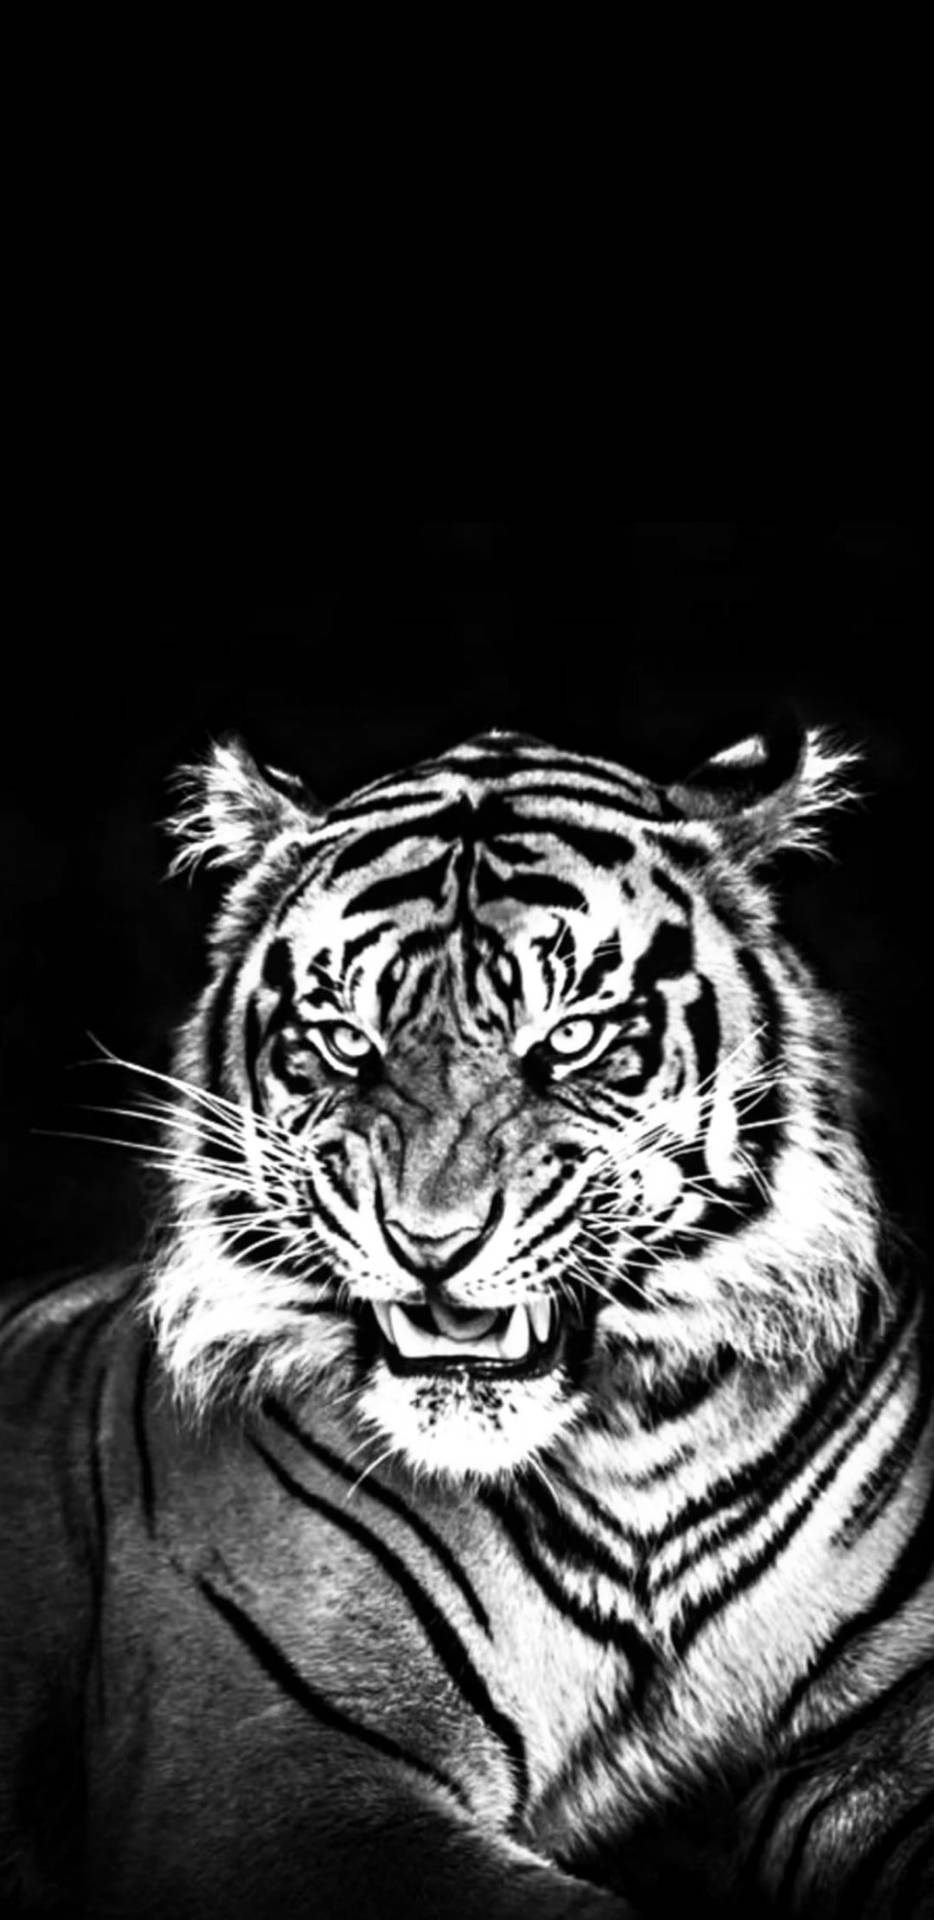 Black Tiger Portrait Image Wallpaper